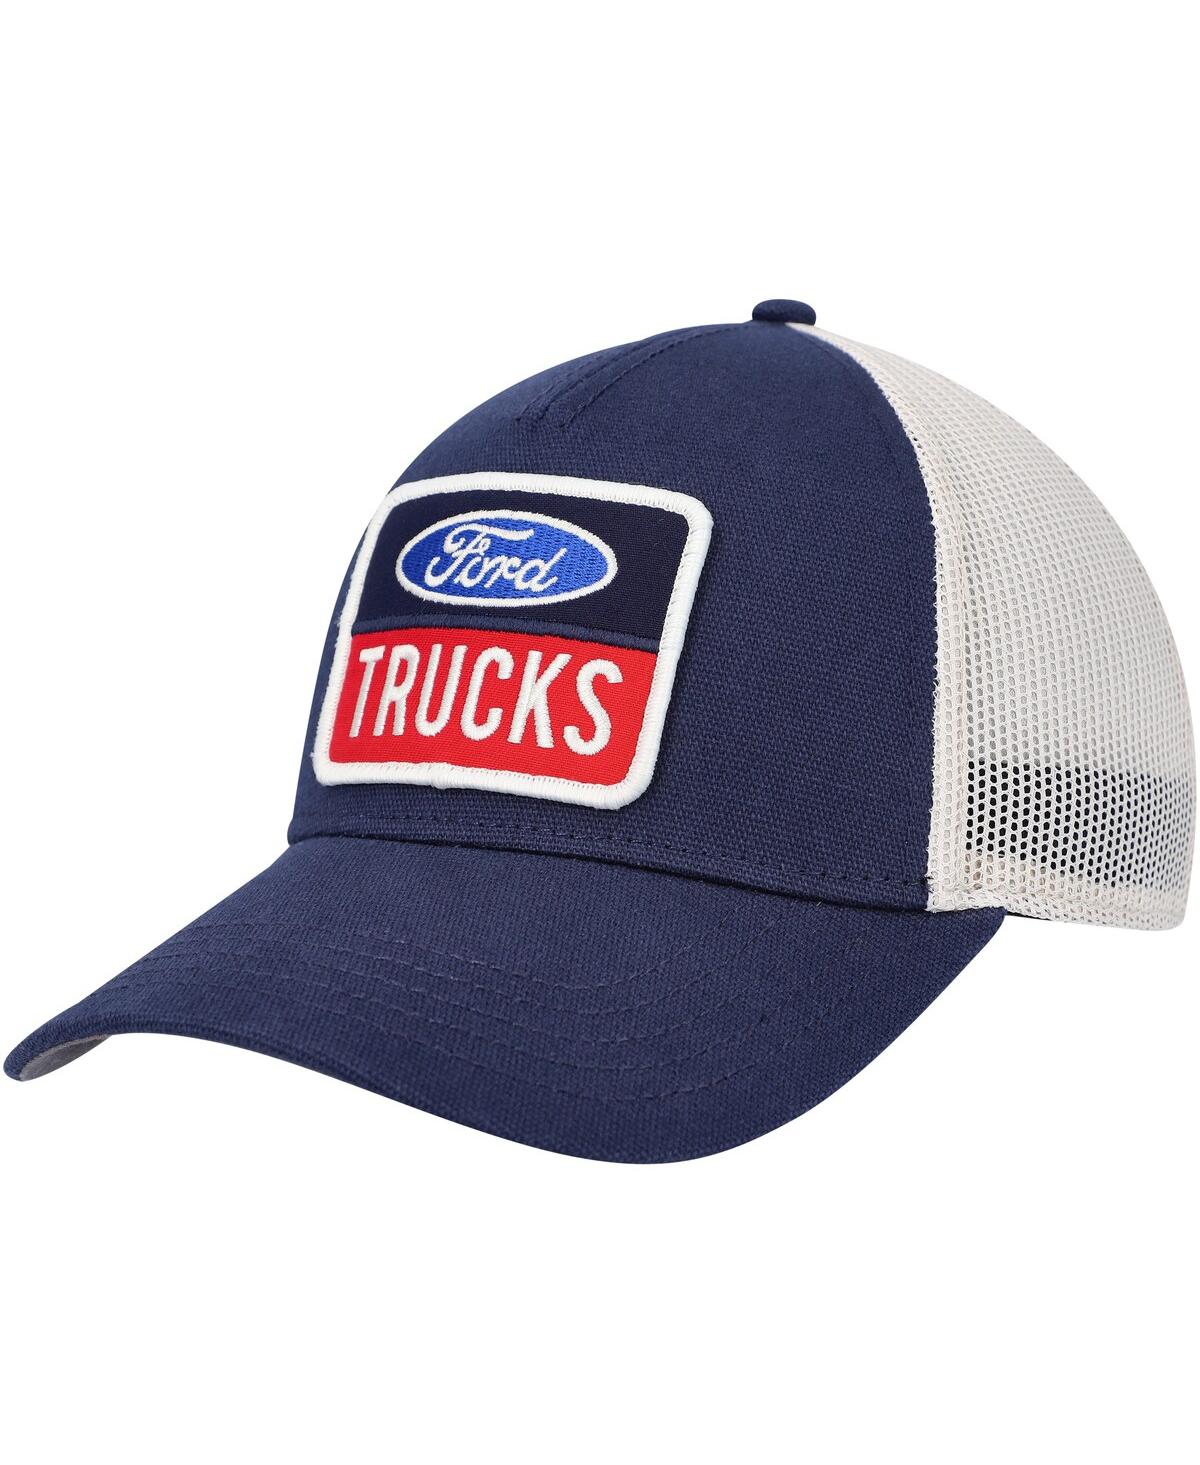 Men's American Needle Navy Ford Trucks Twill Valin Patch Snapback Hat - Navy